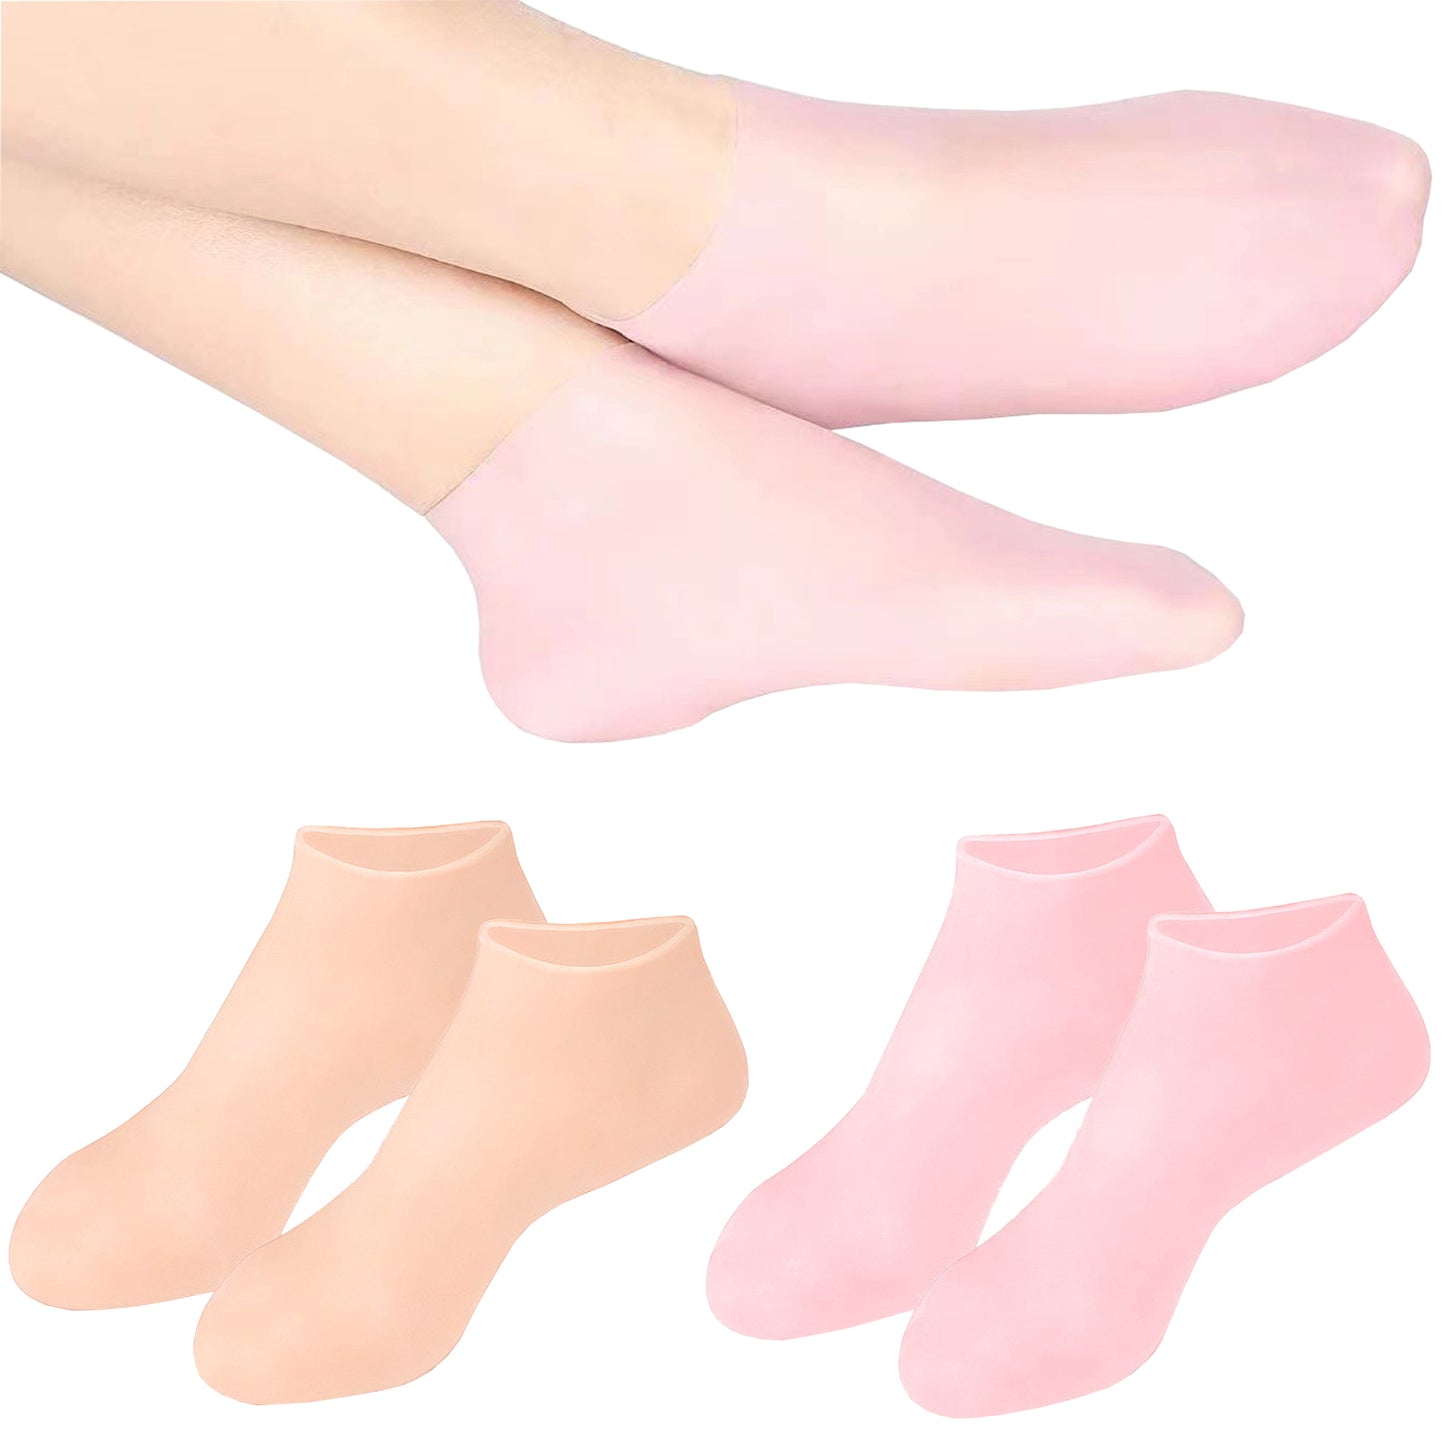 2 Pairs Silicone Socks, Moisturizing Soft Gel Socks for Repairing Dry Cracked Feet, Foot Spa Silicone Pedicure Socks, Moisturizing Foot Socks for Softening Rough Skin